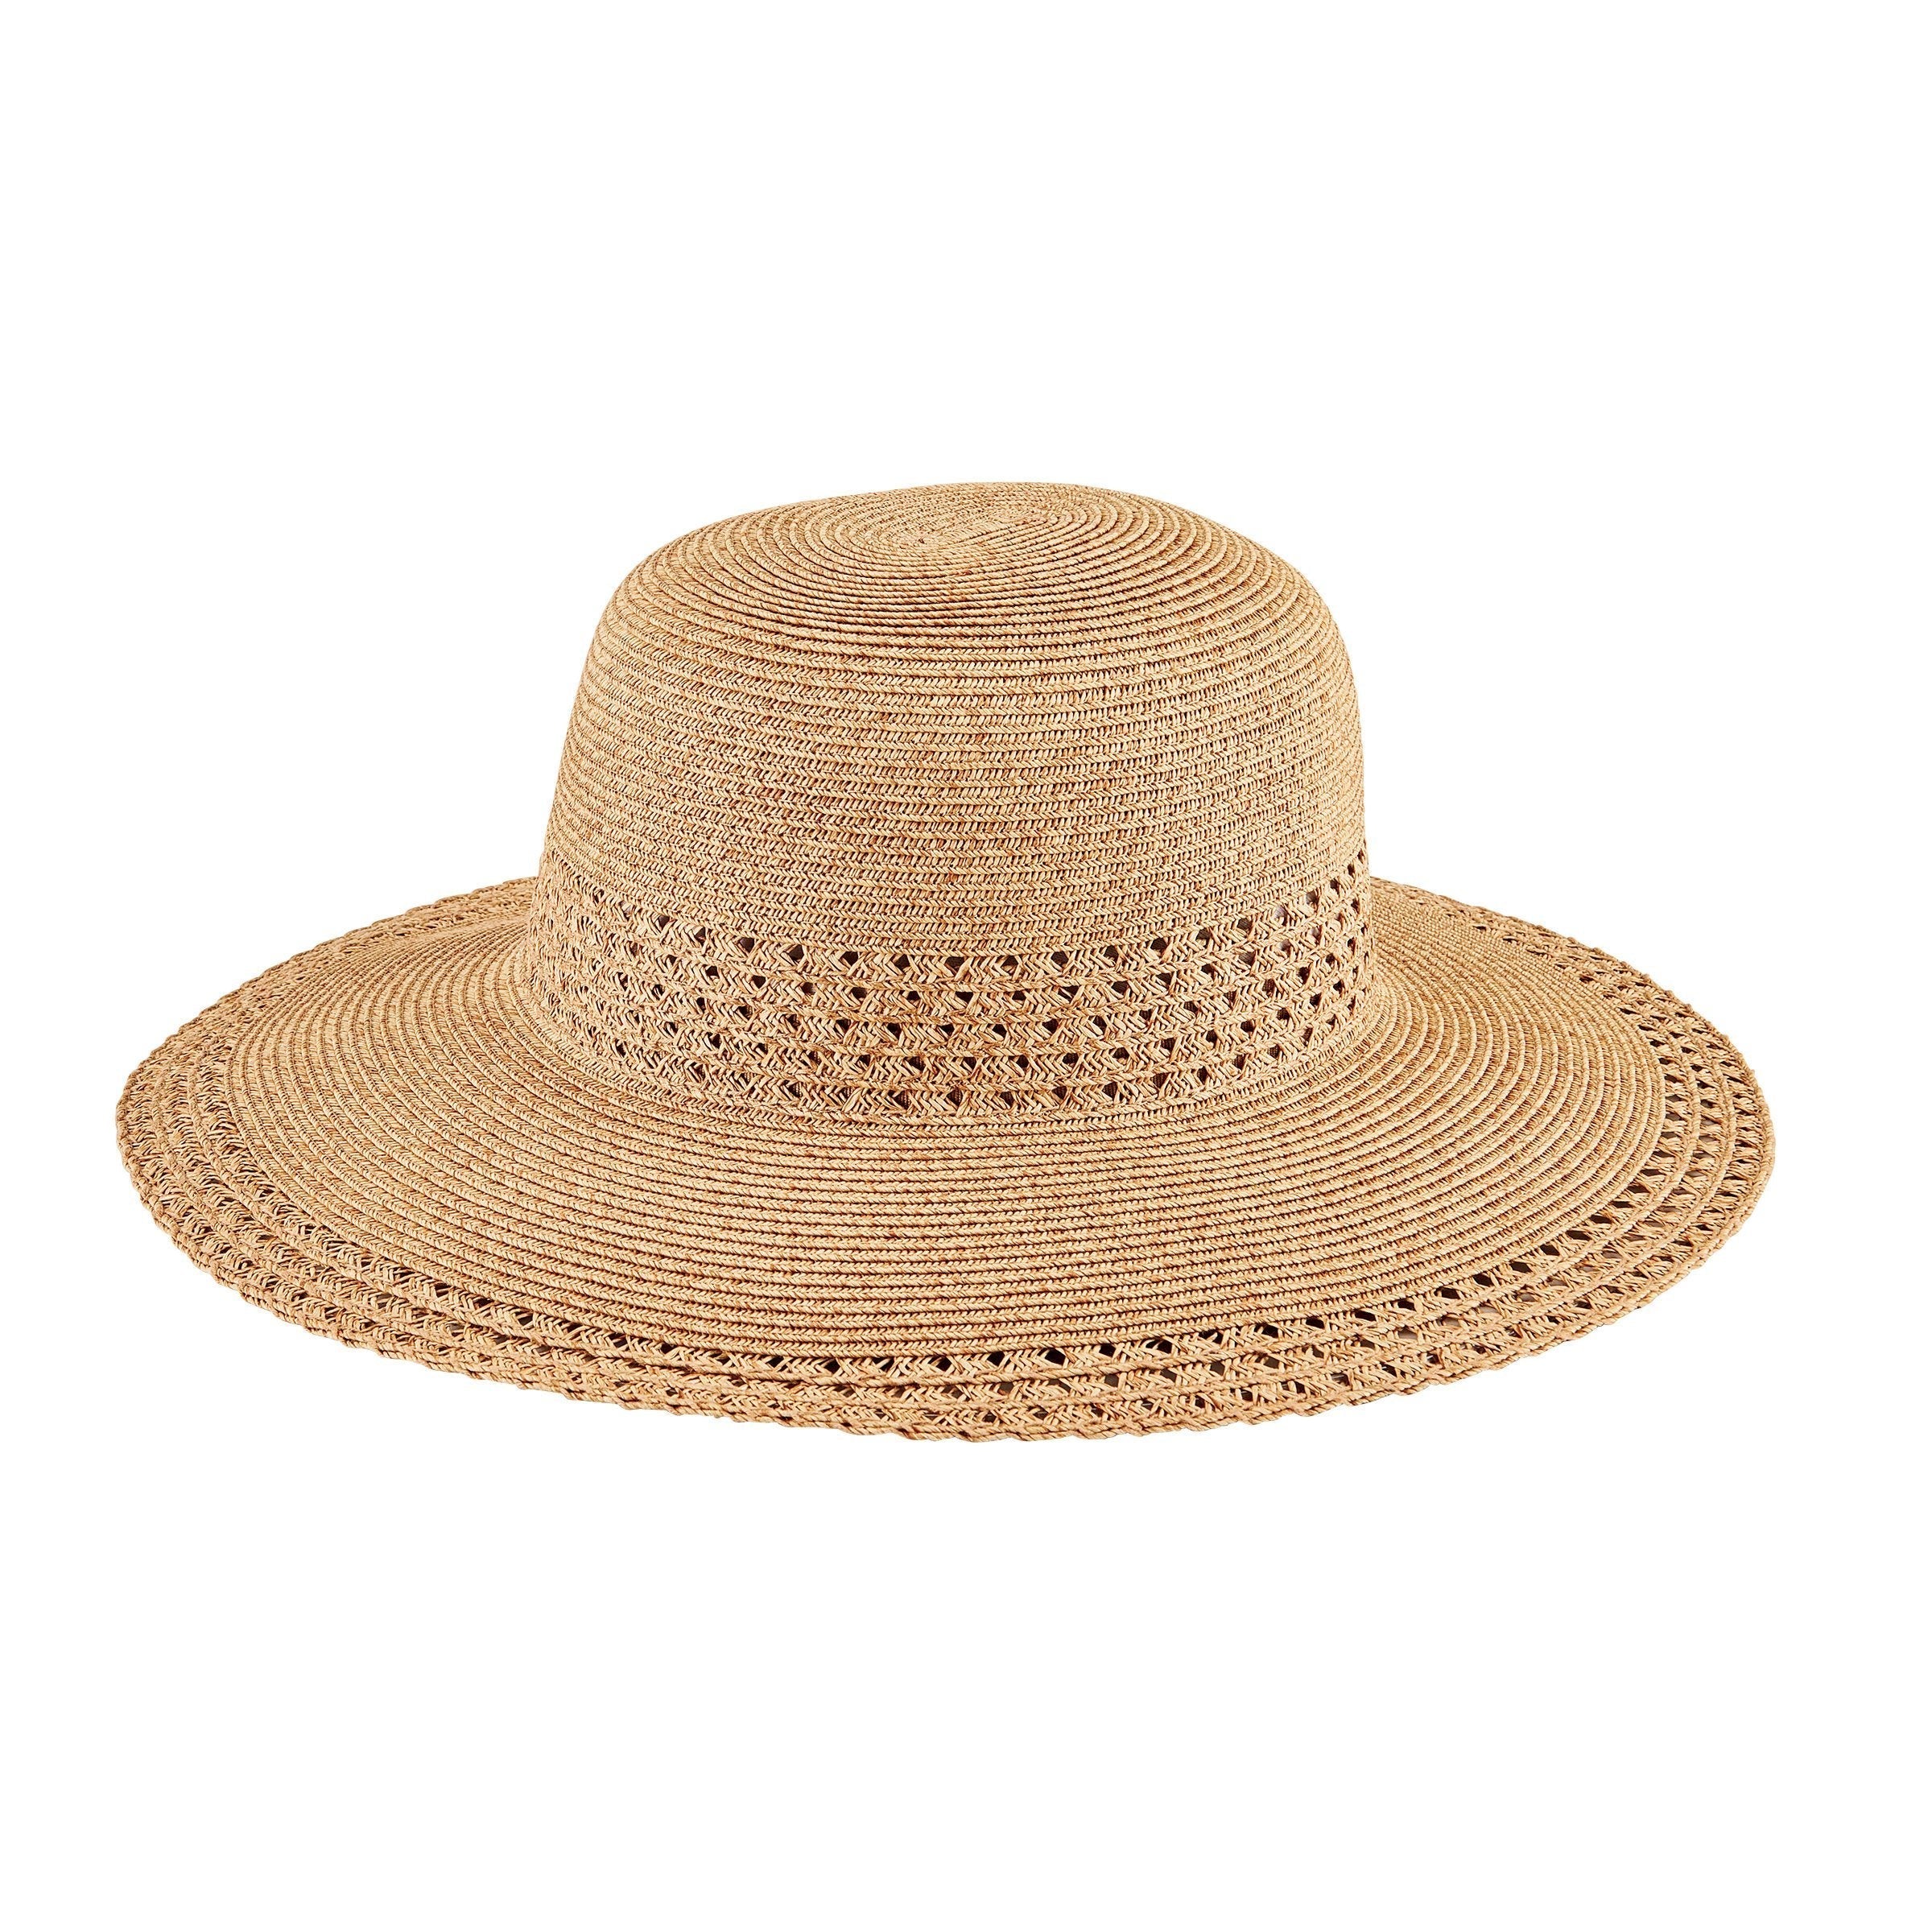 SDHC Everyday Sun Hat - Women's Sun Hat w/ Open Weave Stripes Toast